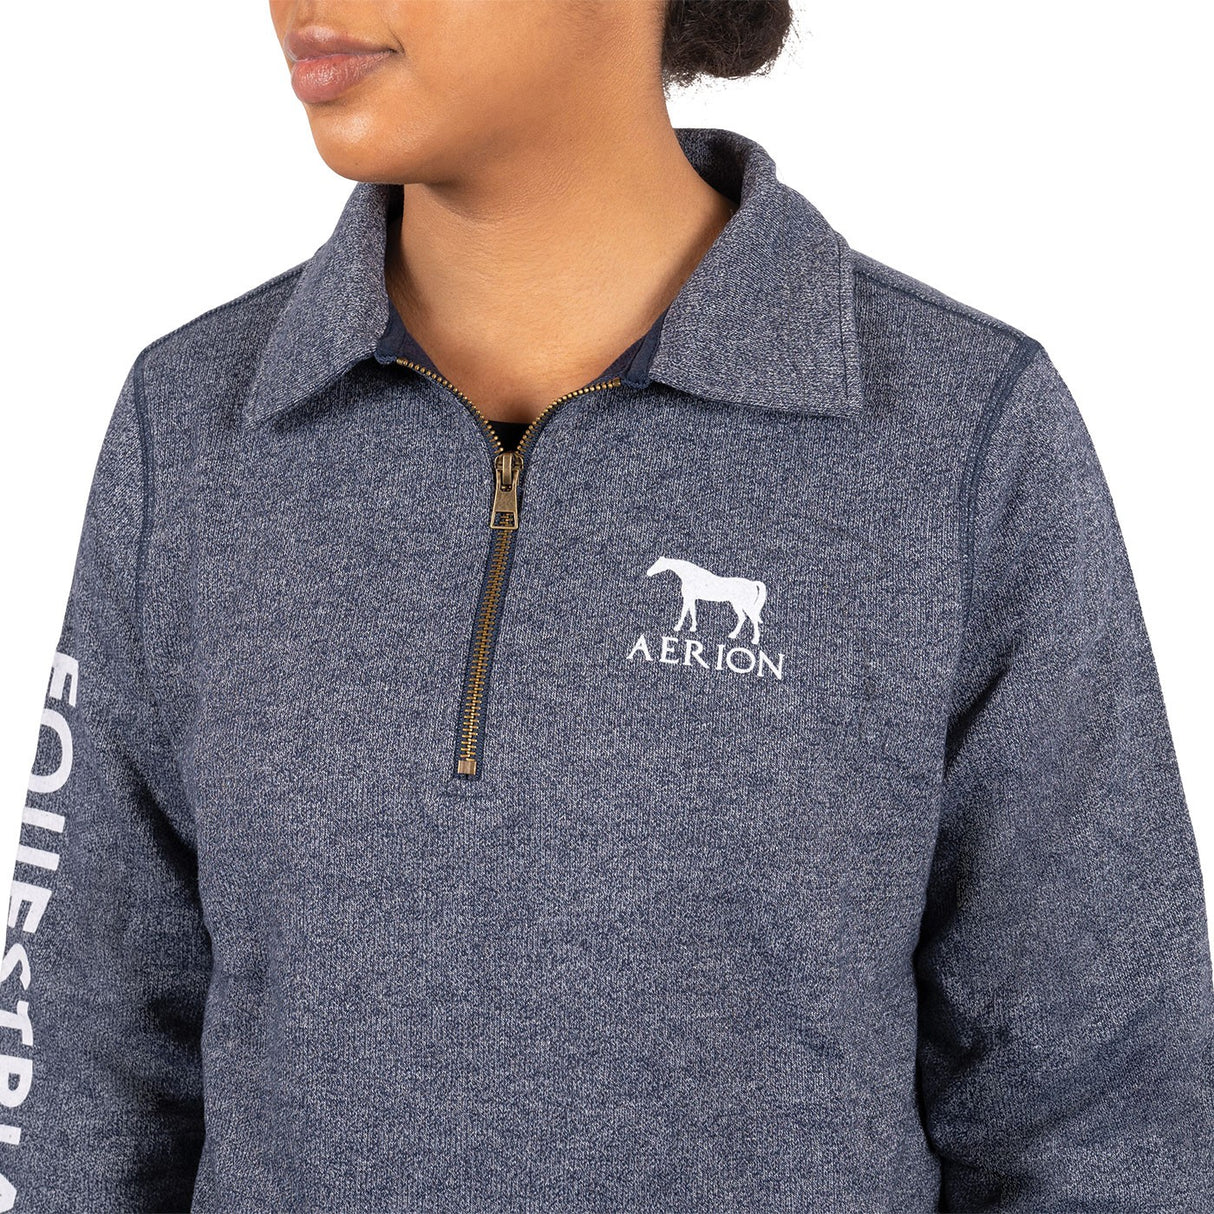 Taupe Grey 1/4 Zip Equestrian Sweatshirt – Gray Equestrian Clothing